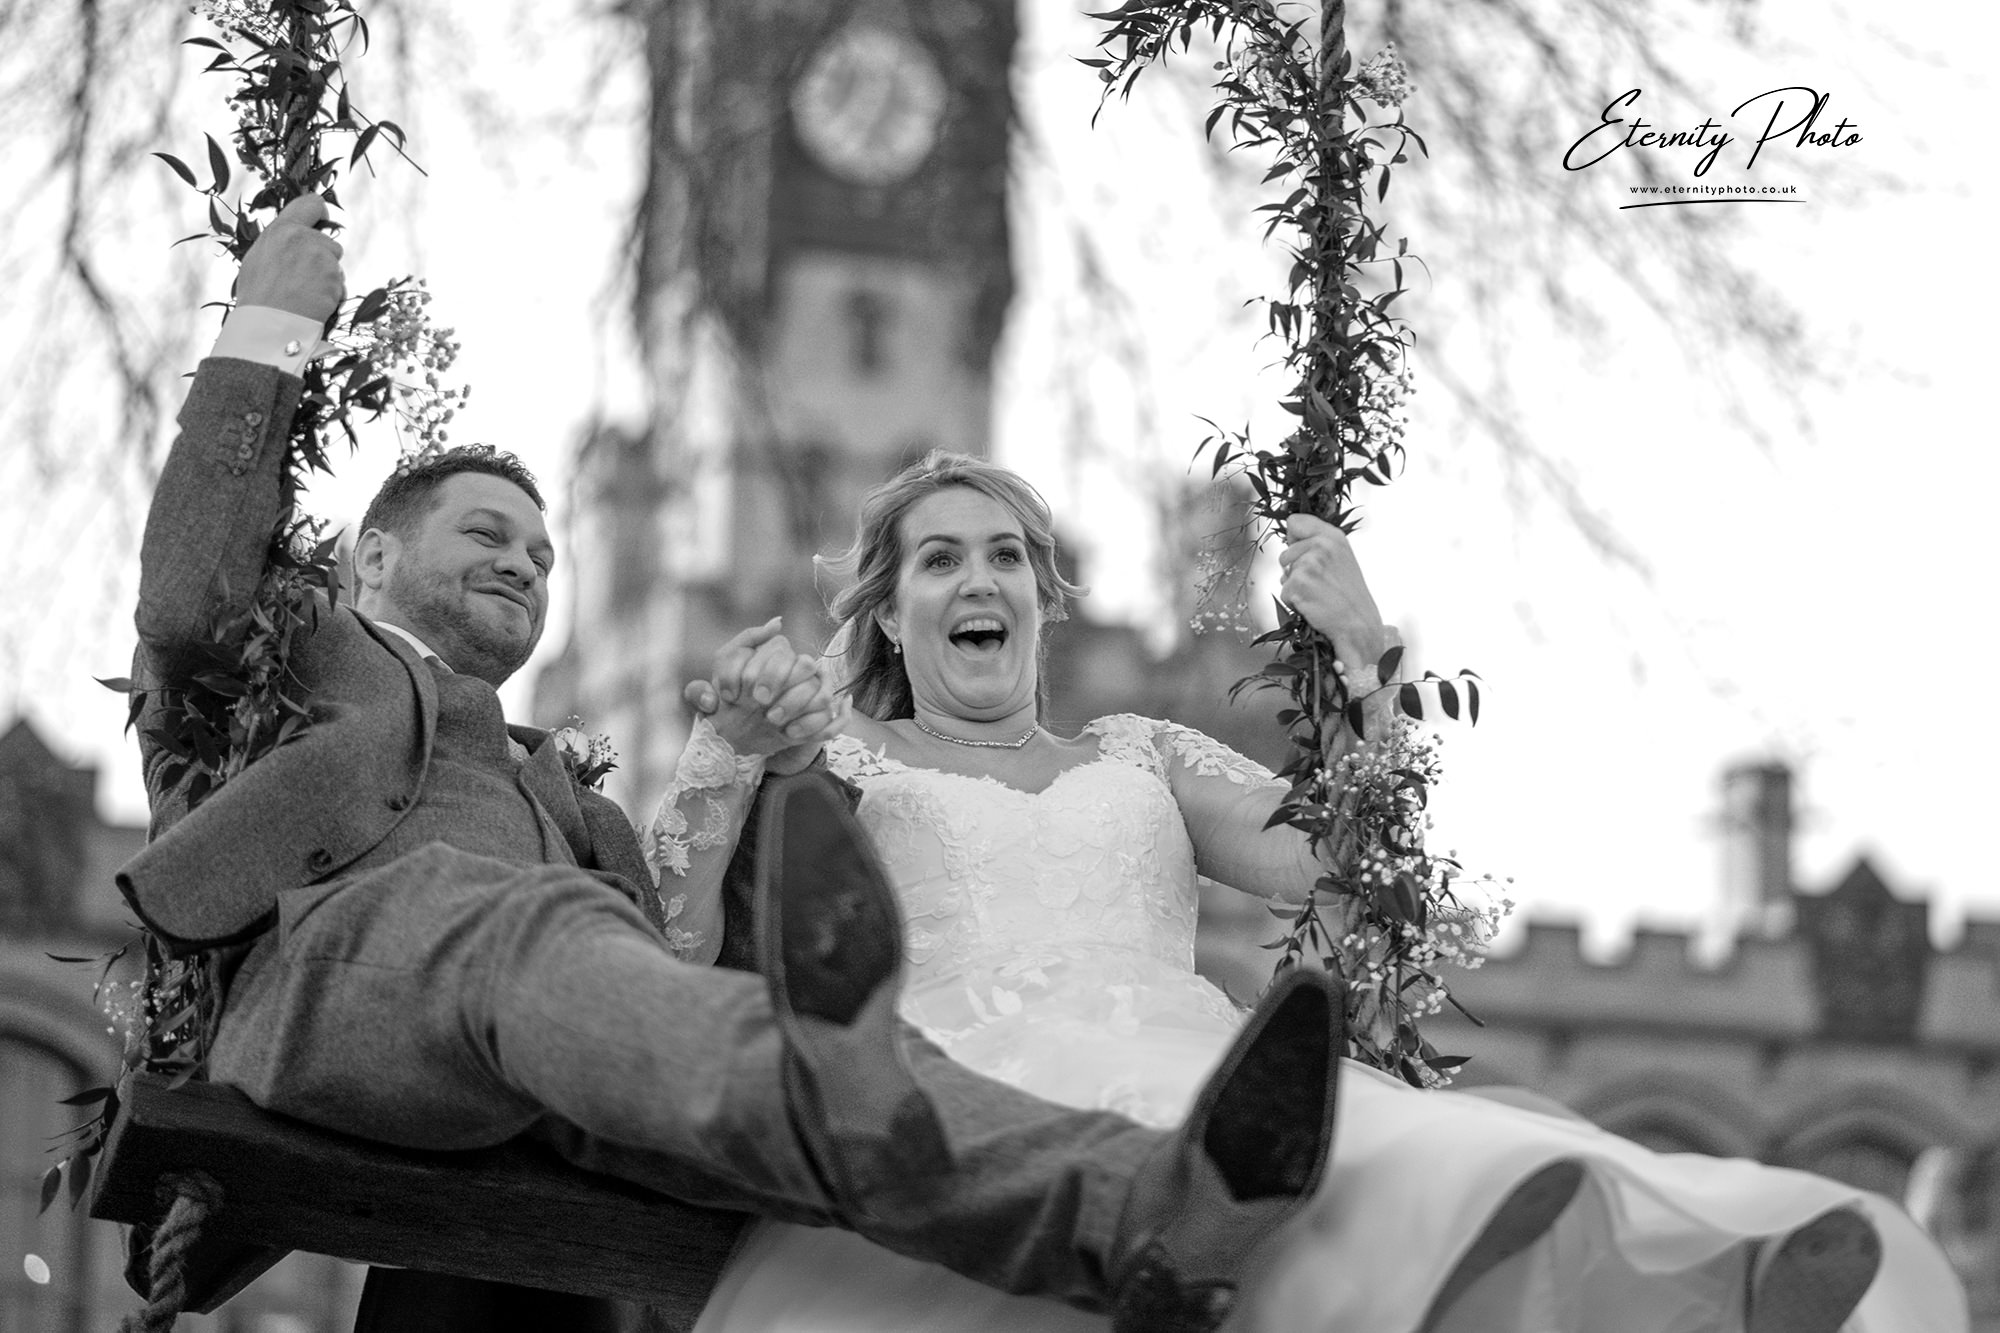 Joyful couple on swing at wedding event